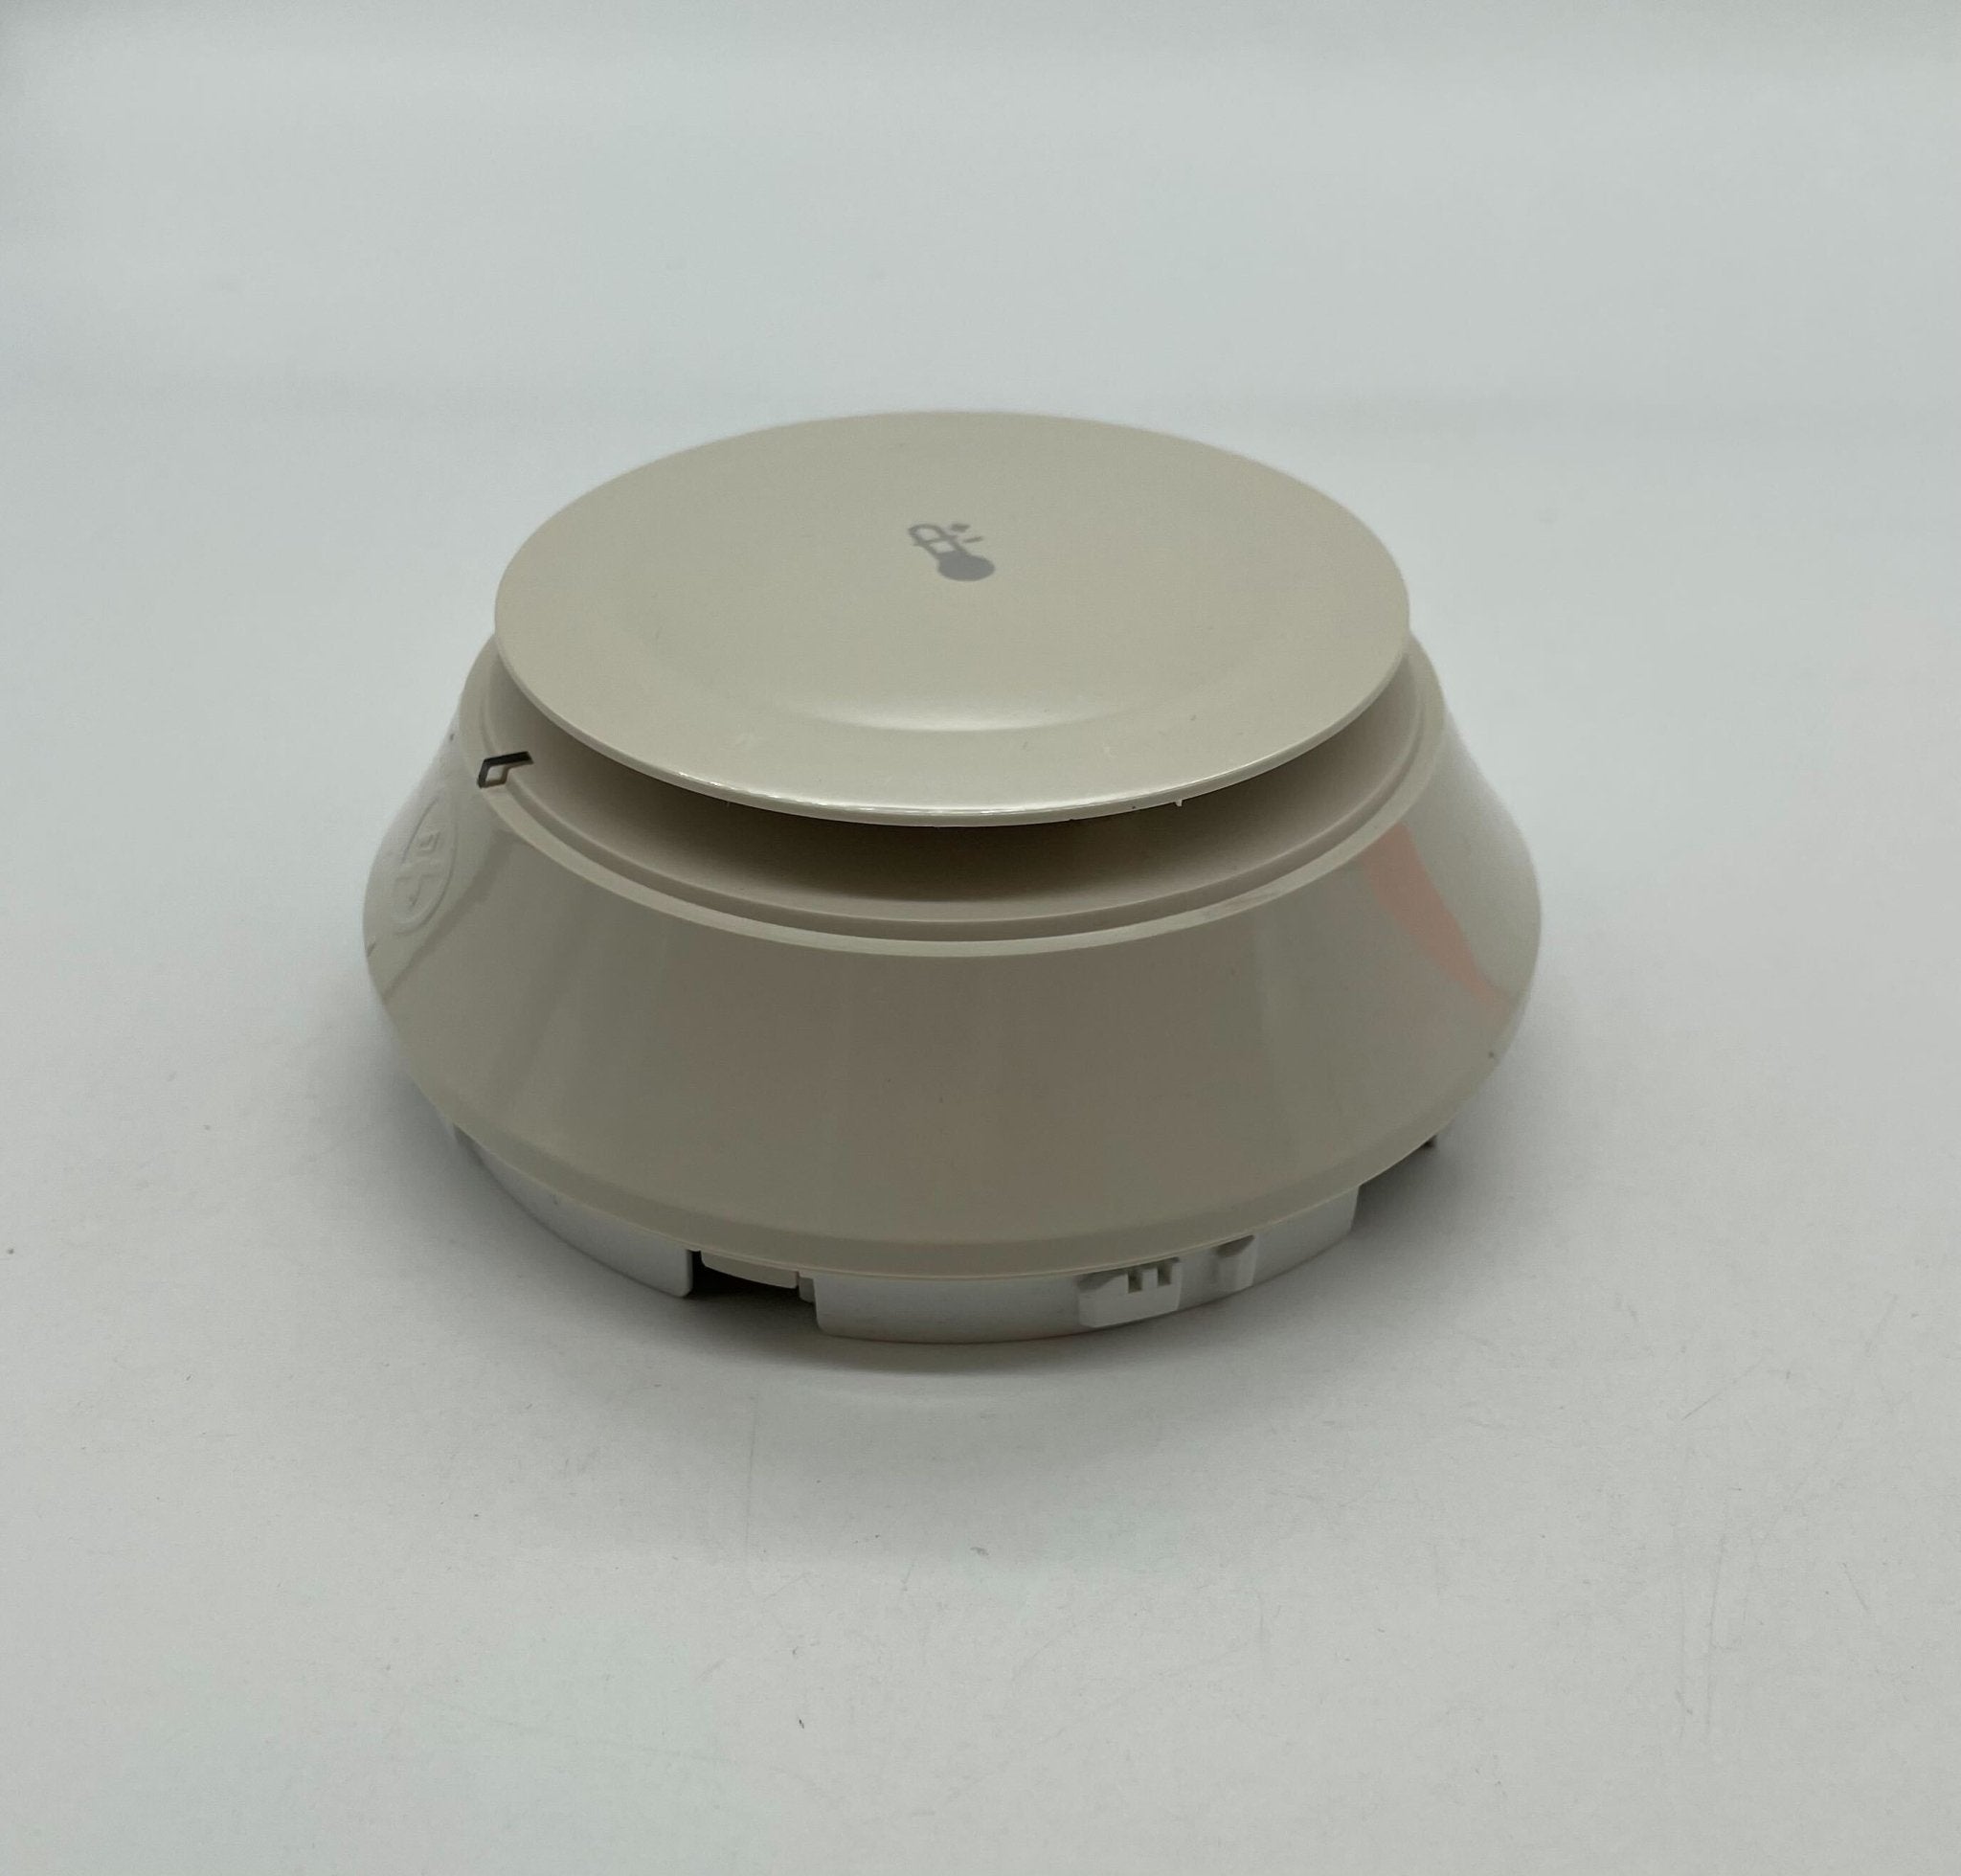 Notifier FST-951H-IV - The Fire Alarm Supplier